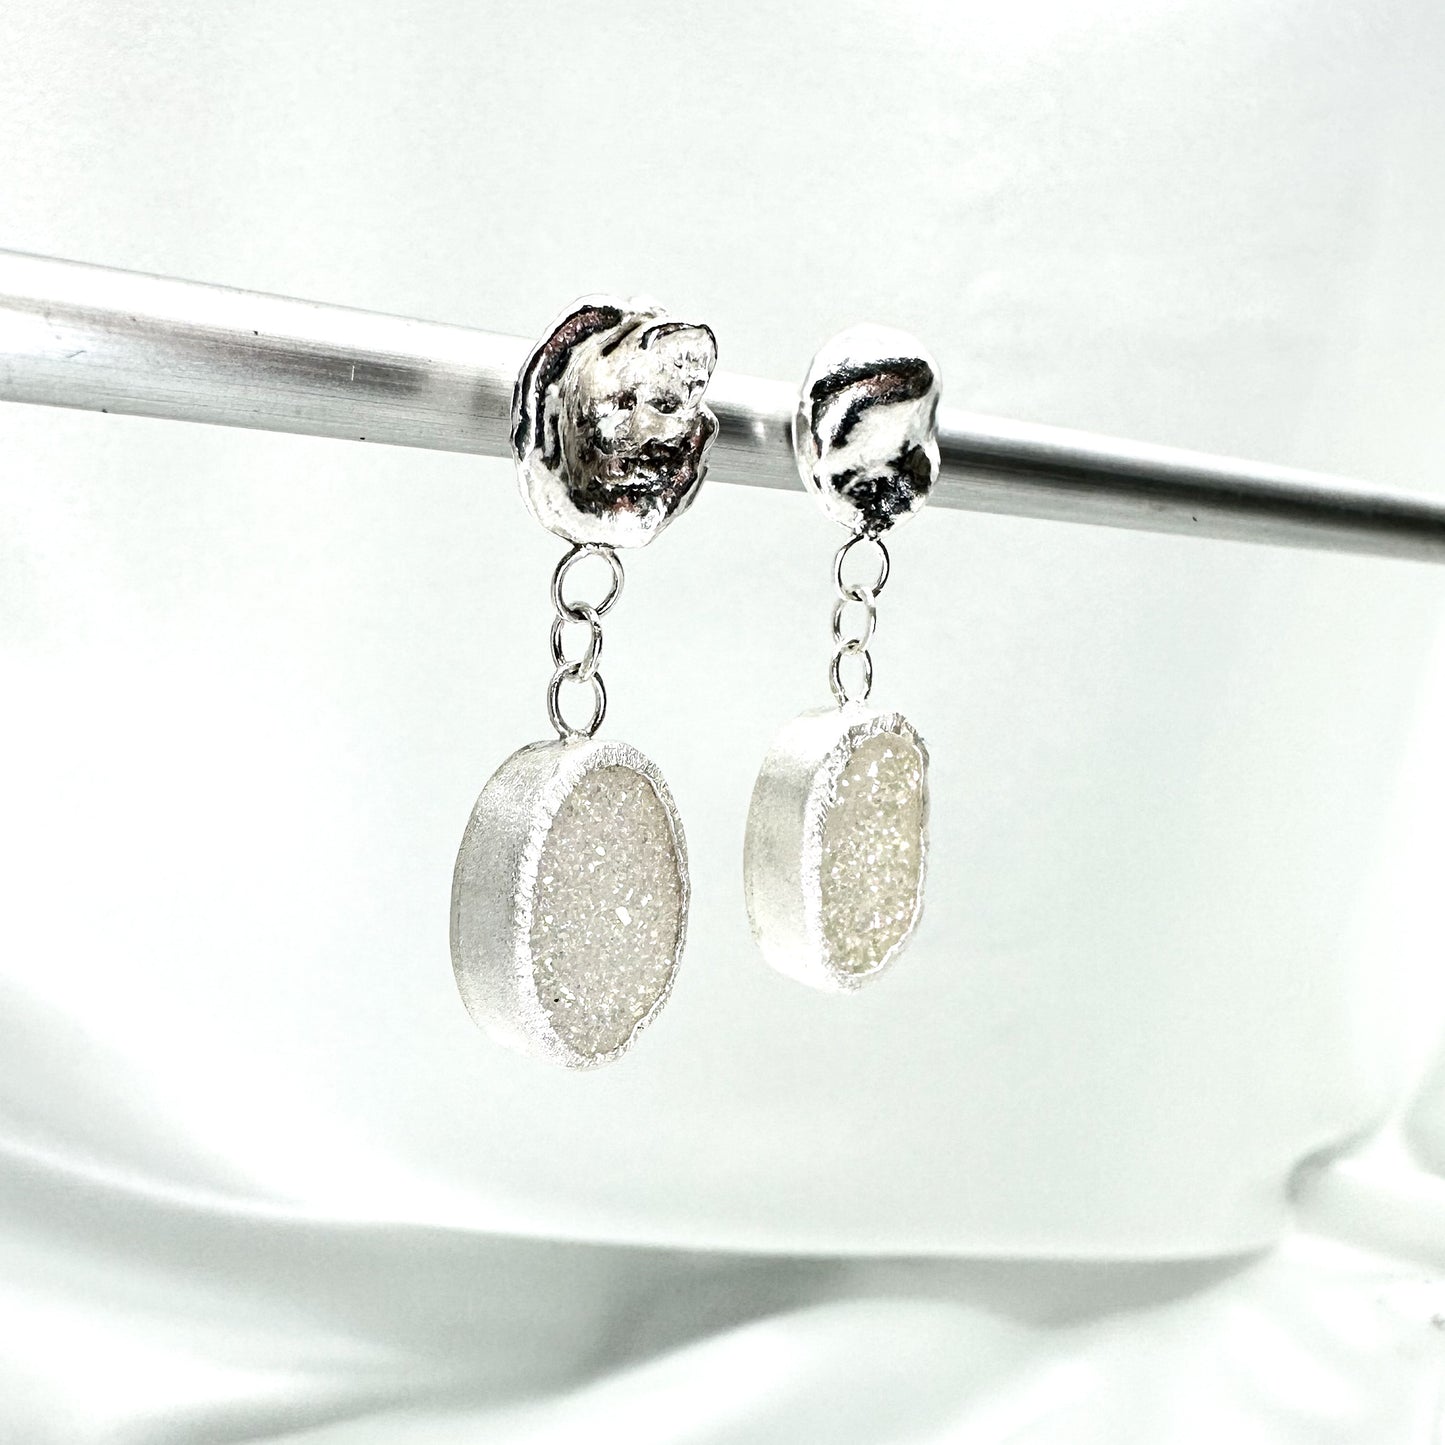 Stunning White Druzy Quartz Drop Earrings in Sterling Silver